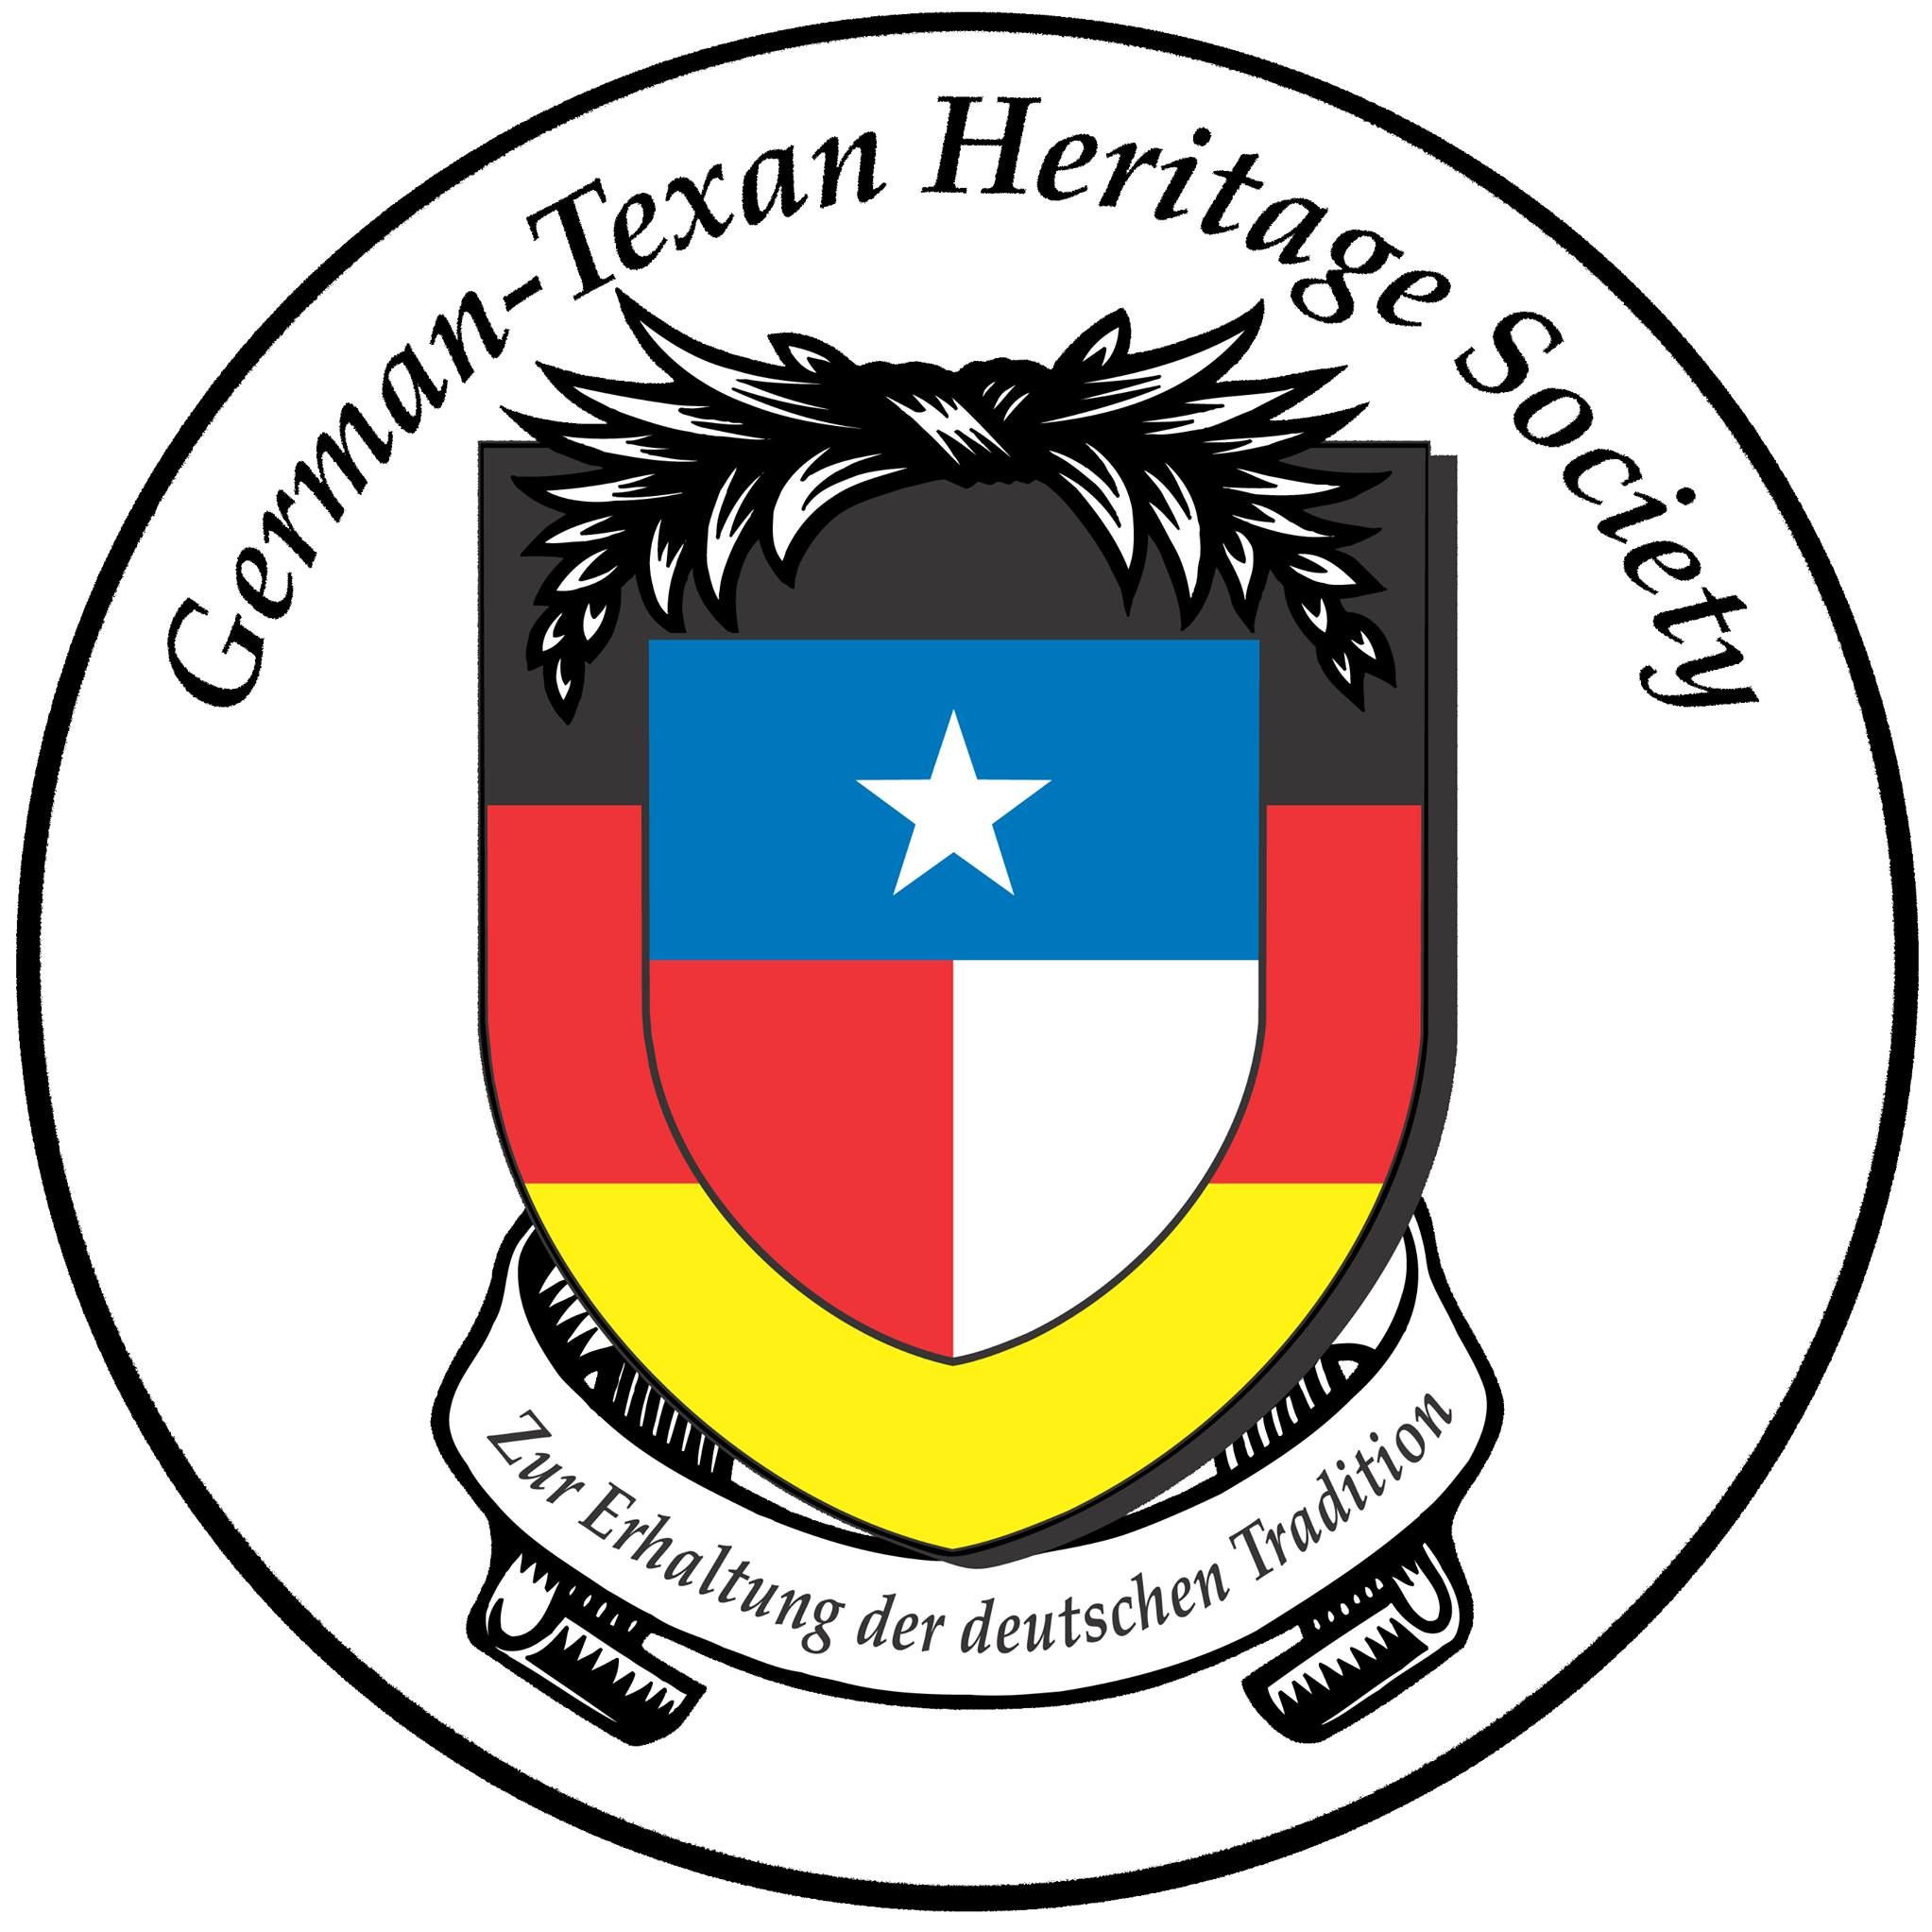 German Organization in Austin Texas - German Texan Heritage Society